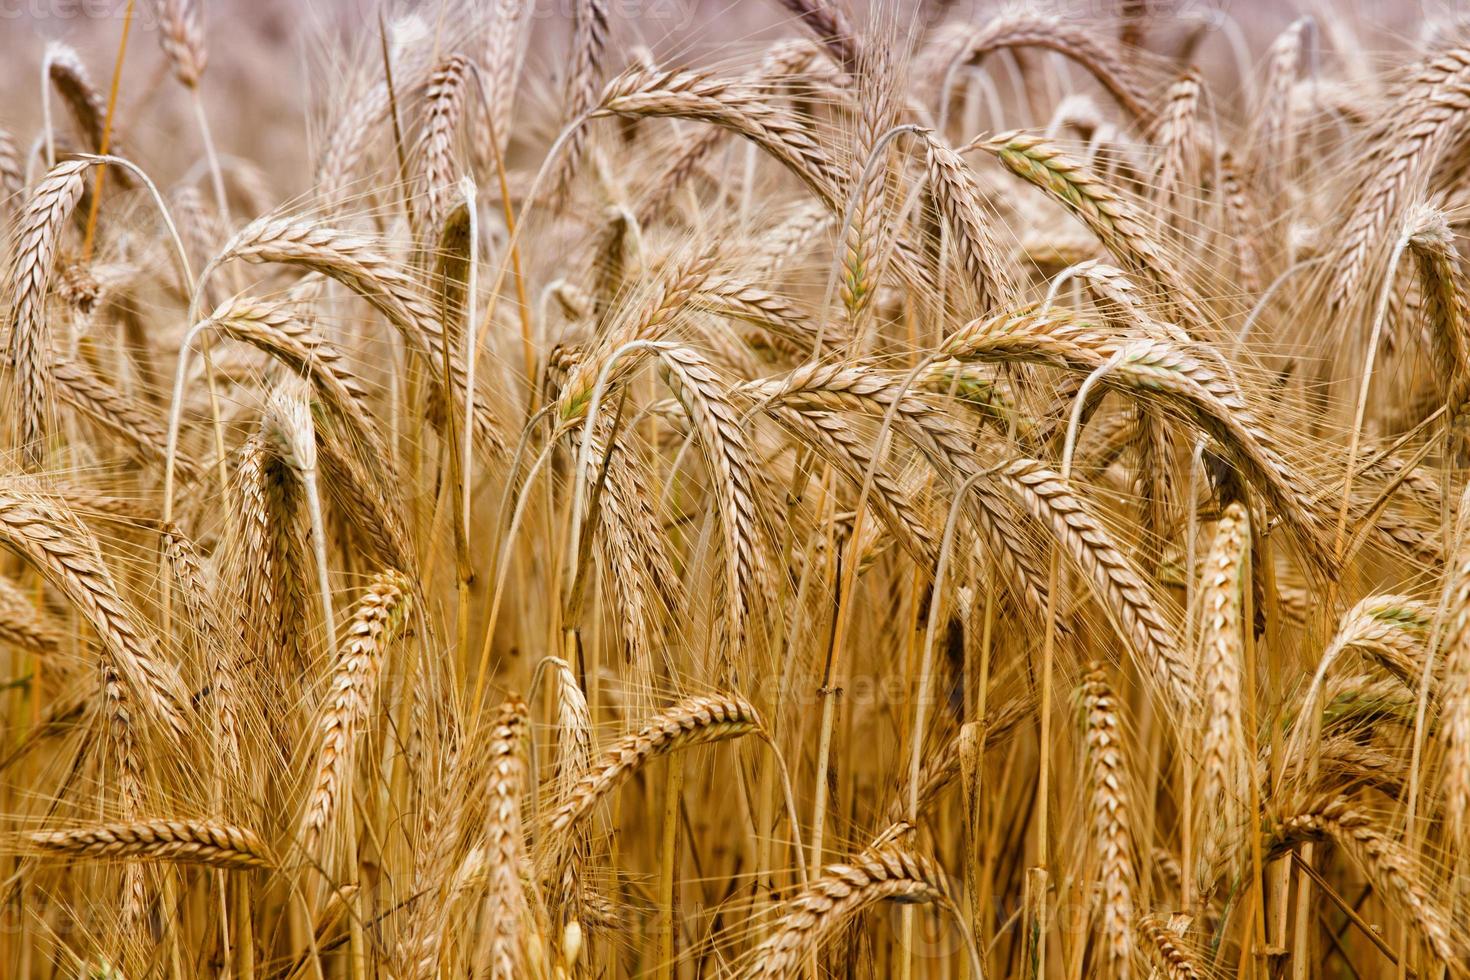 Barley field photo